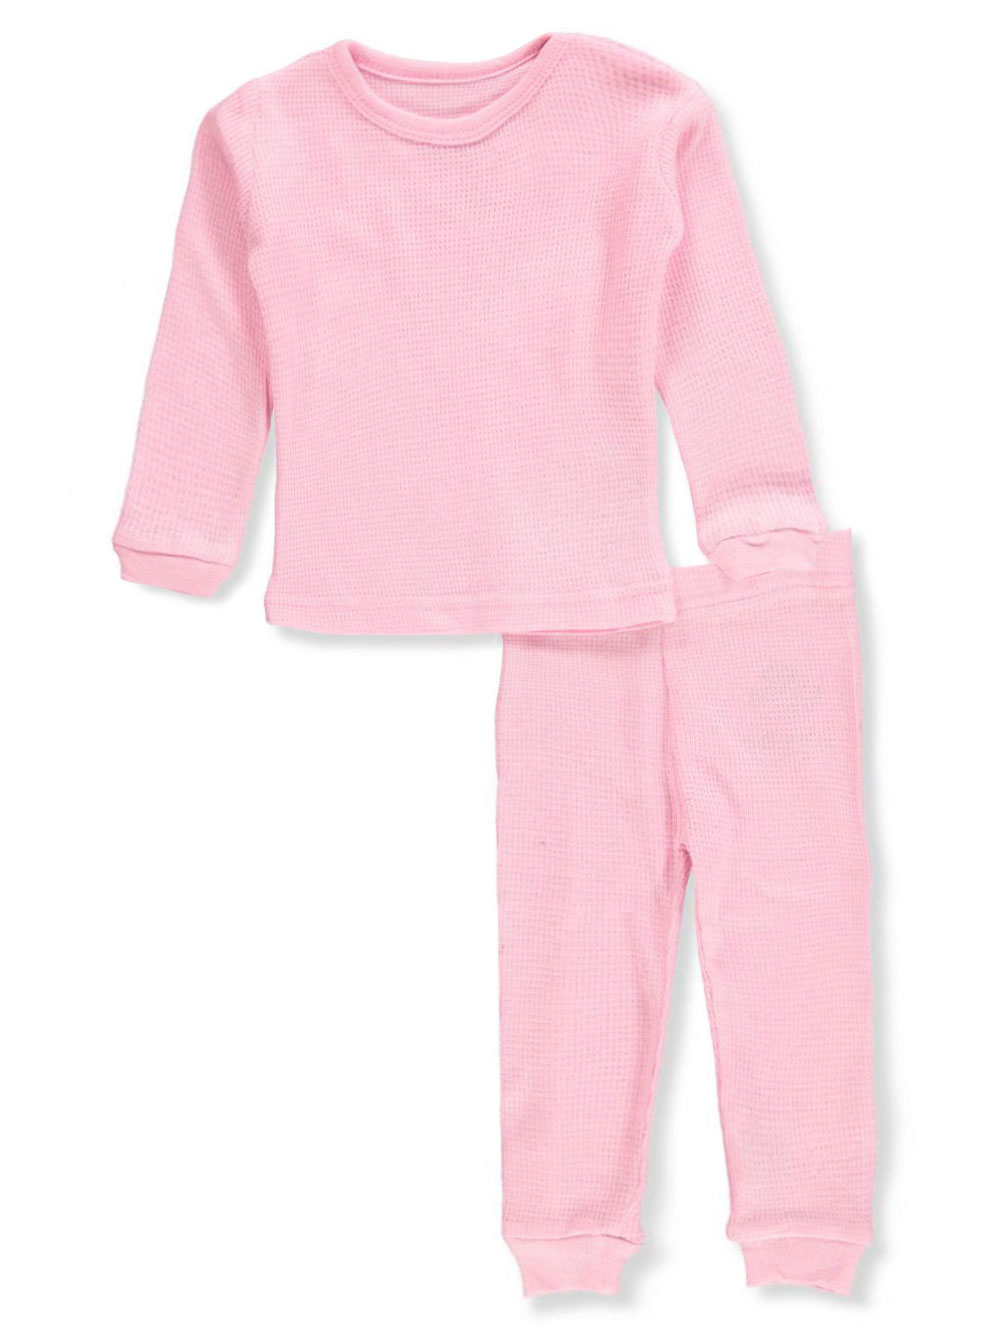 Ice2O Baby Girls' 2-Piece Thermal Long Underwear Set | eBay